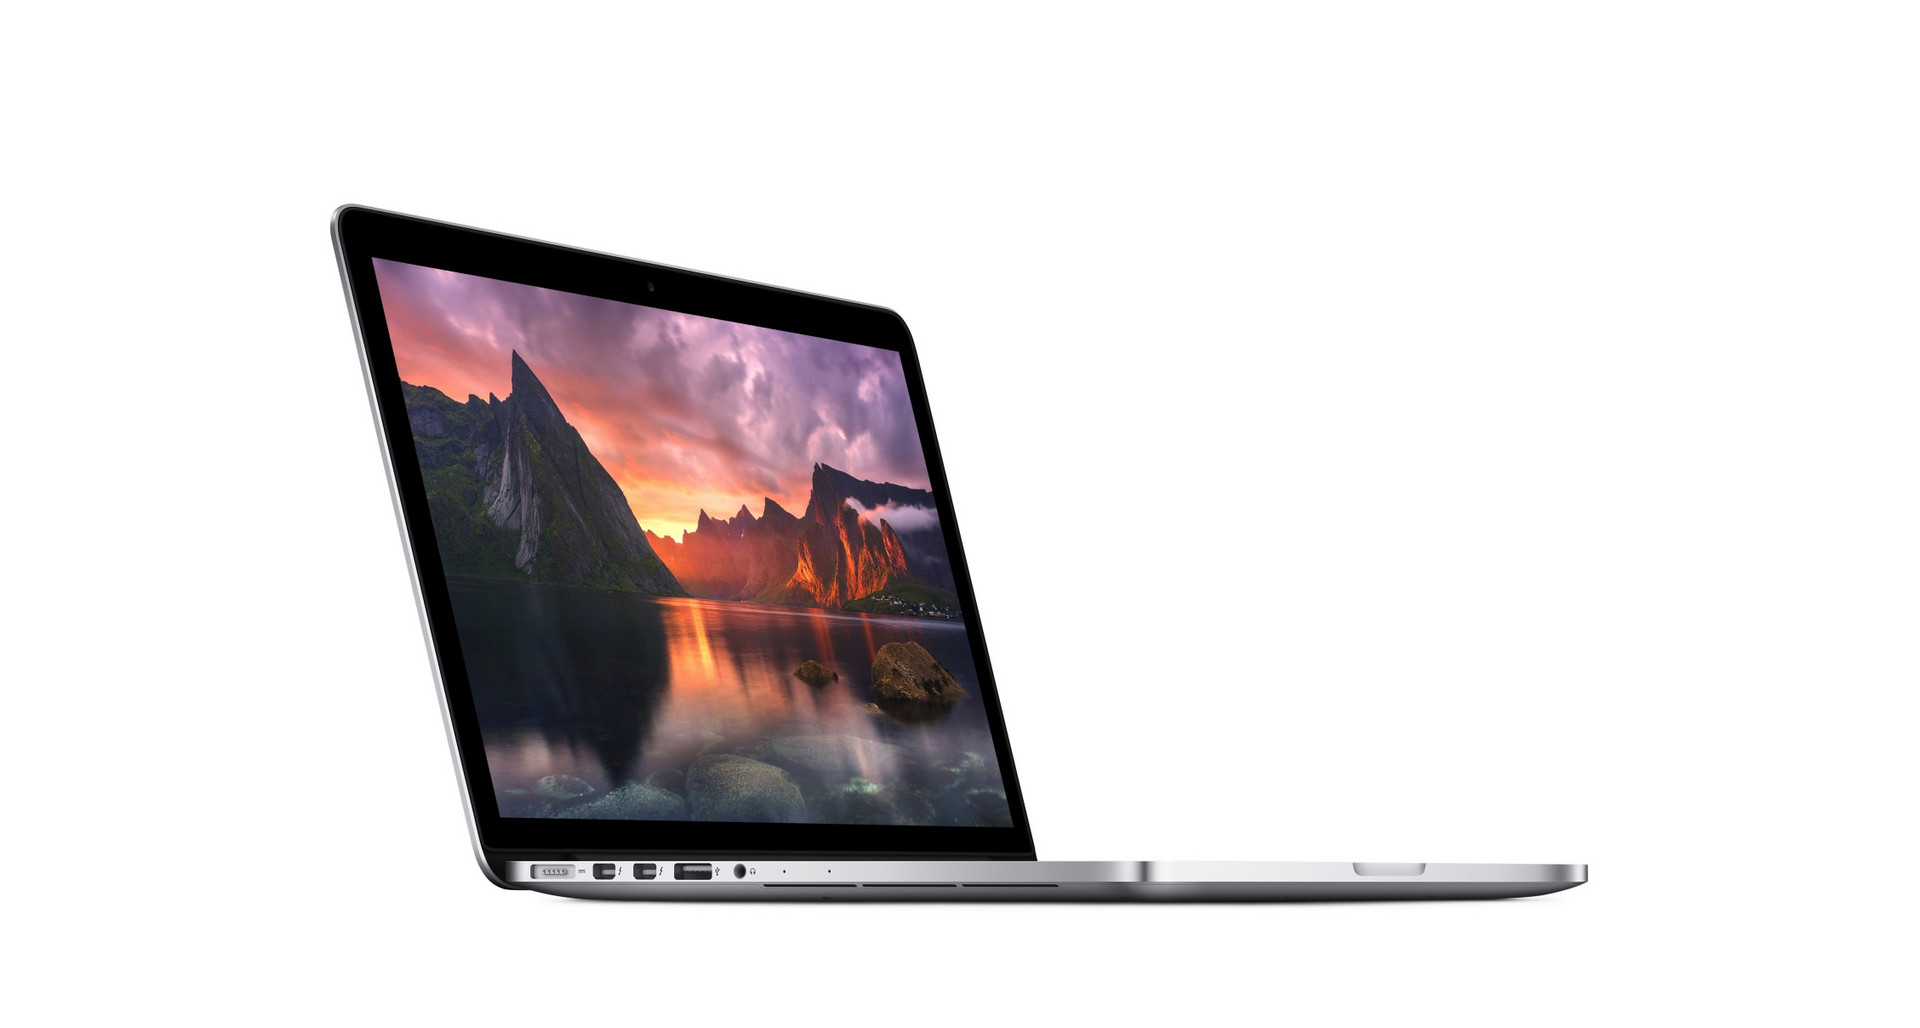 750GB HARD DRIVE FOR Apple Macbook Pro 15" Core 2 Duo MacBook 2.0GHz CORE 2 DUO 